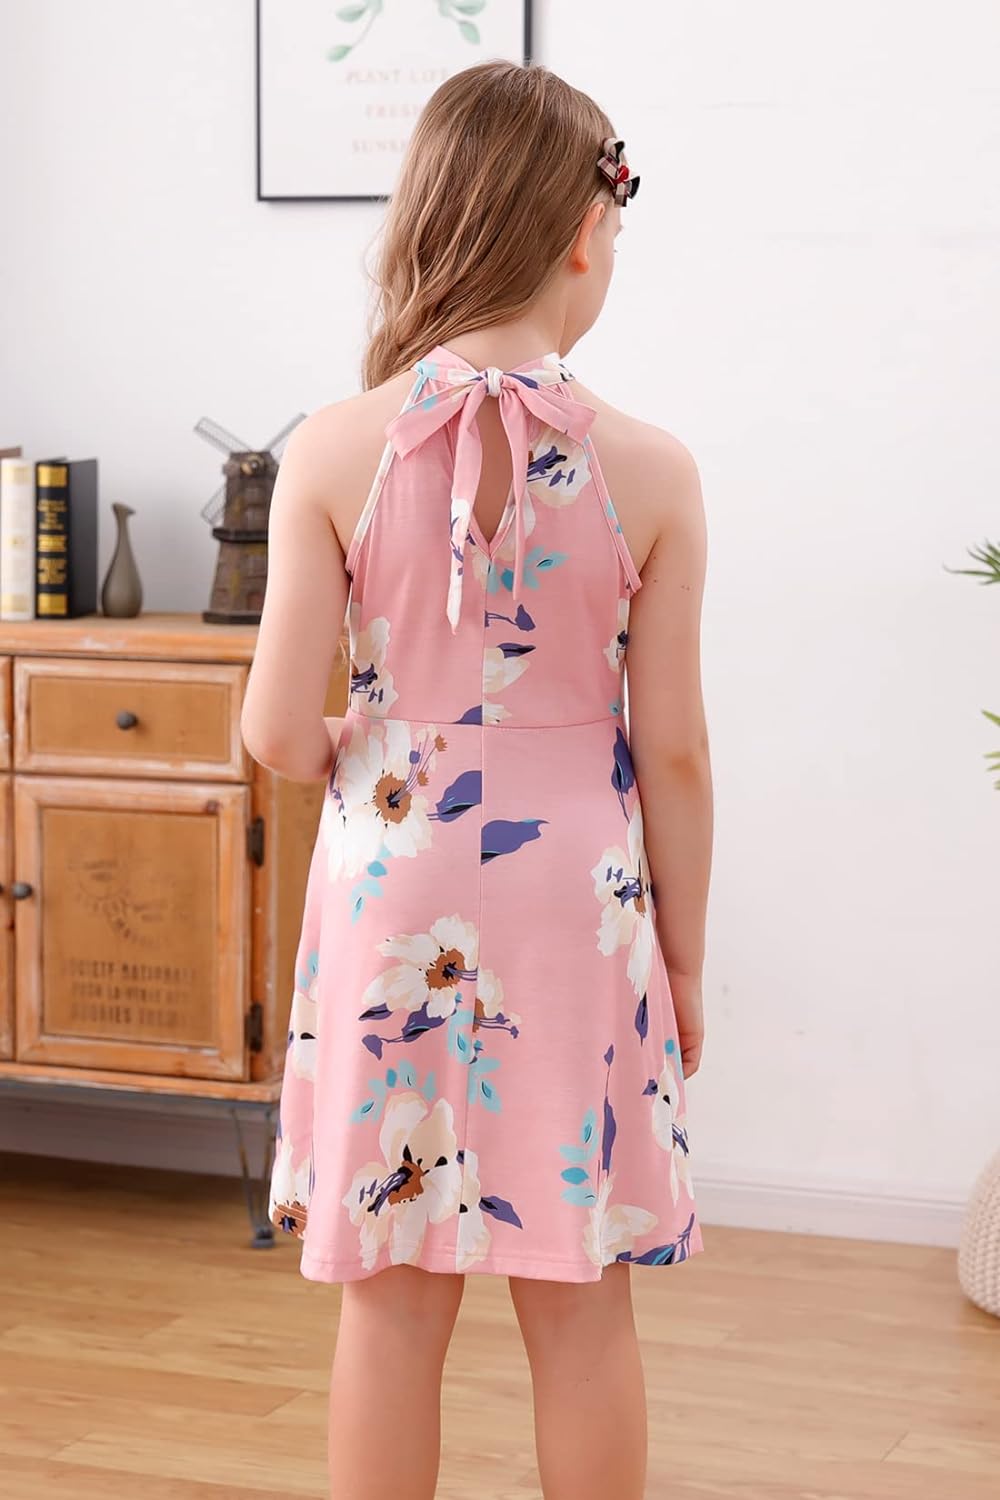 GORLYA Girl's Halter Neck Cold Shoulder Sleeveless Summer Casual Sundress A-line Dress with Pockets for 4-14T Kids